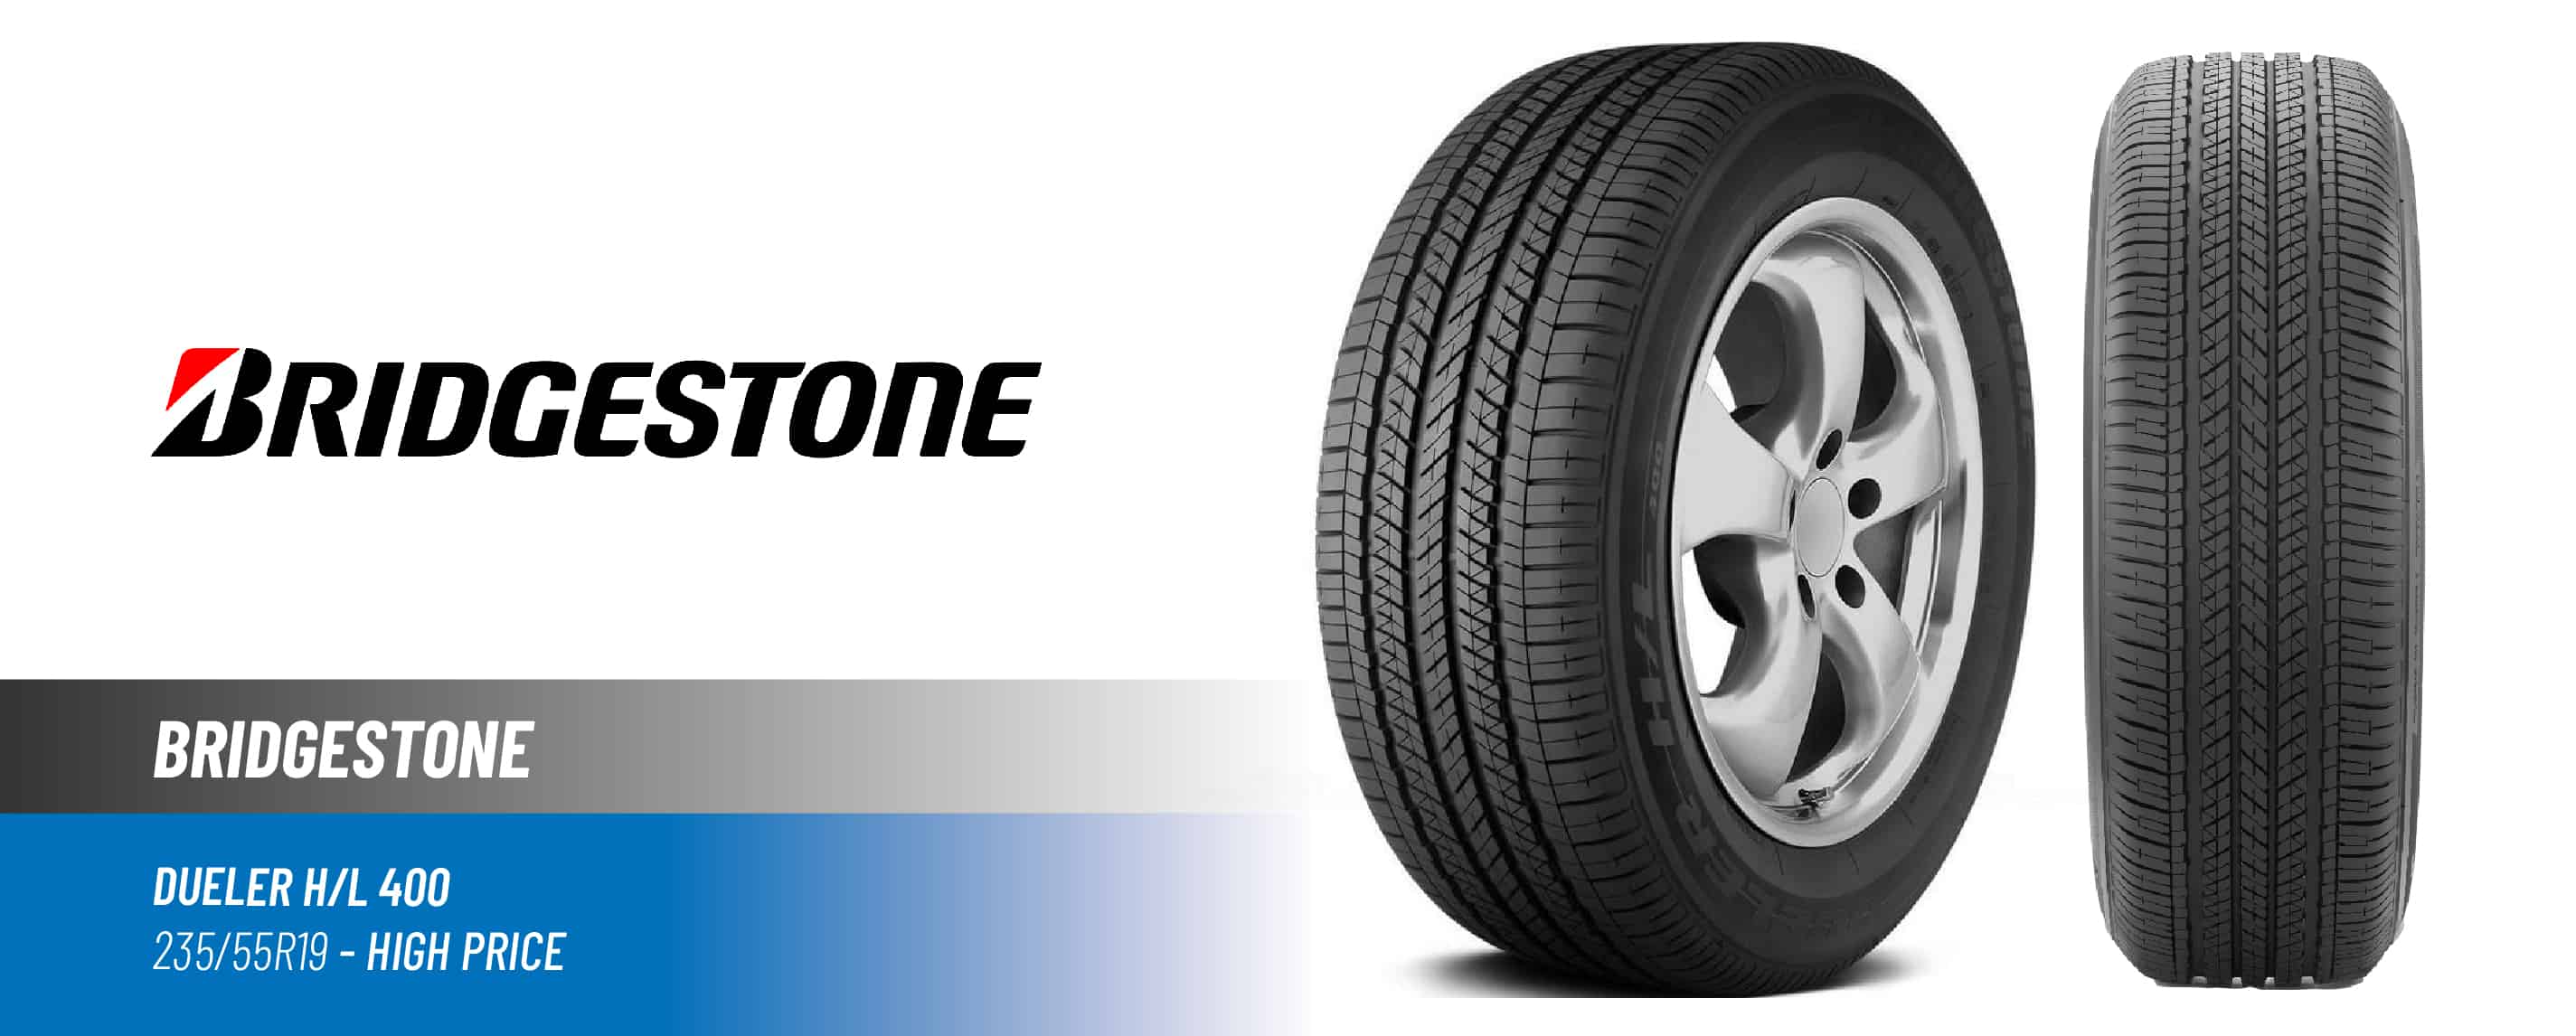 Top#5 High Price: Bridgestone Dueler H/L 400 –best 235/55R19